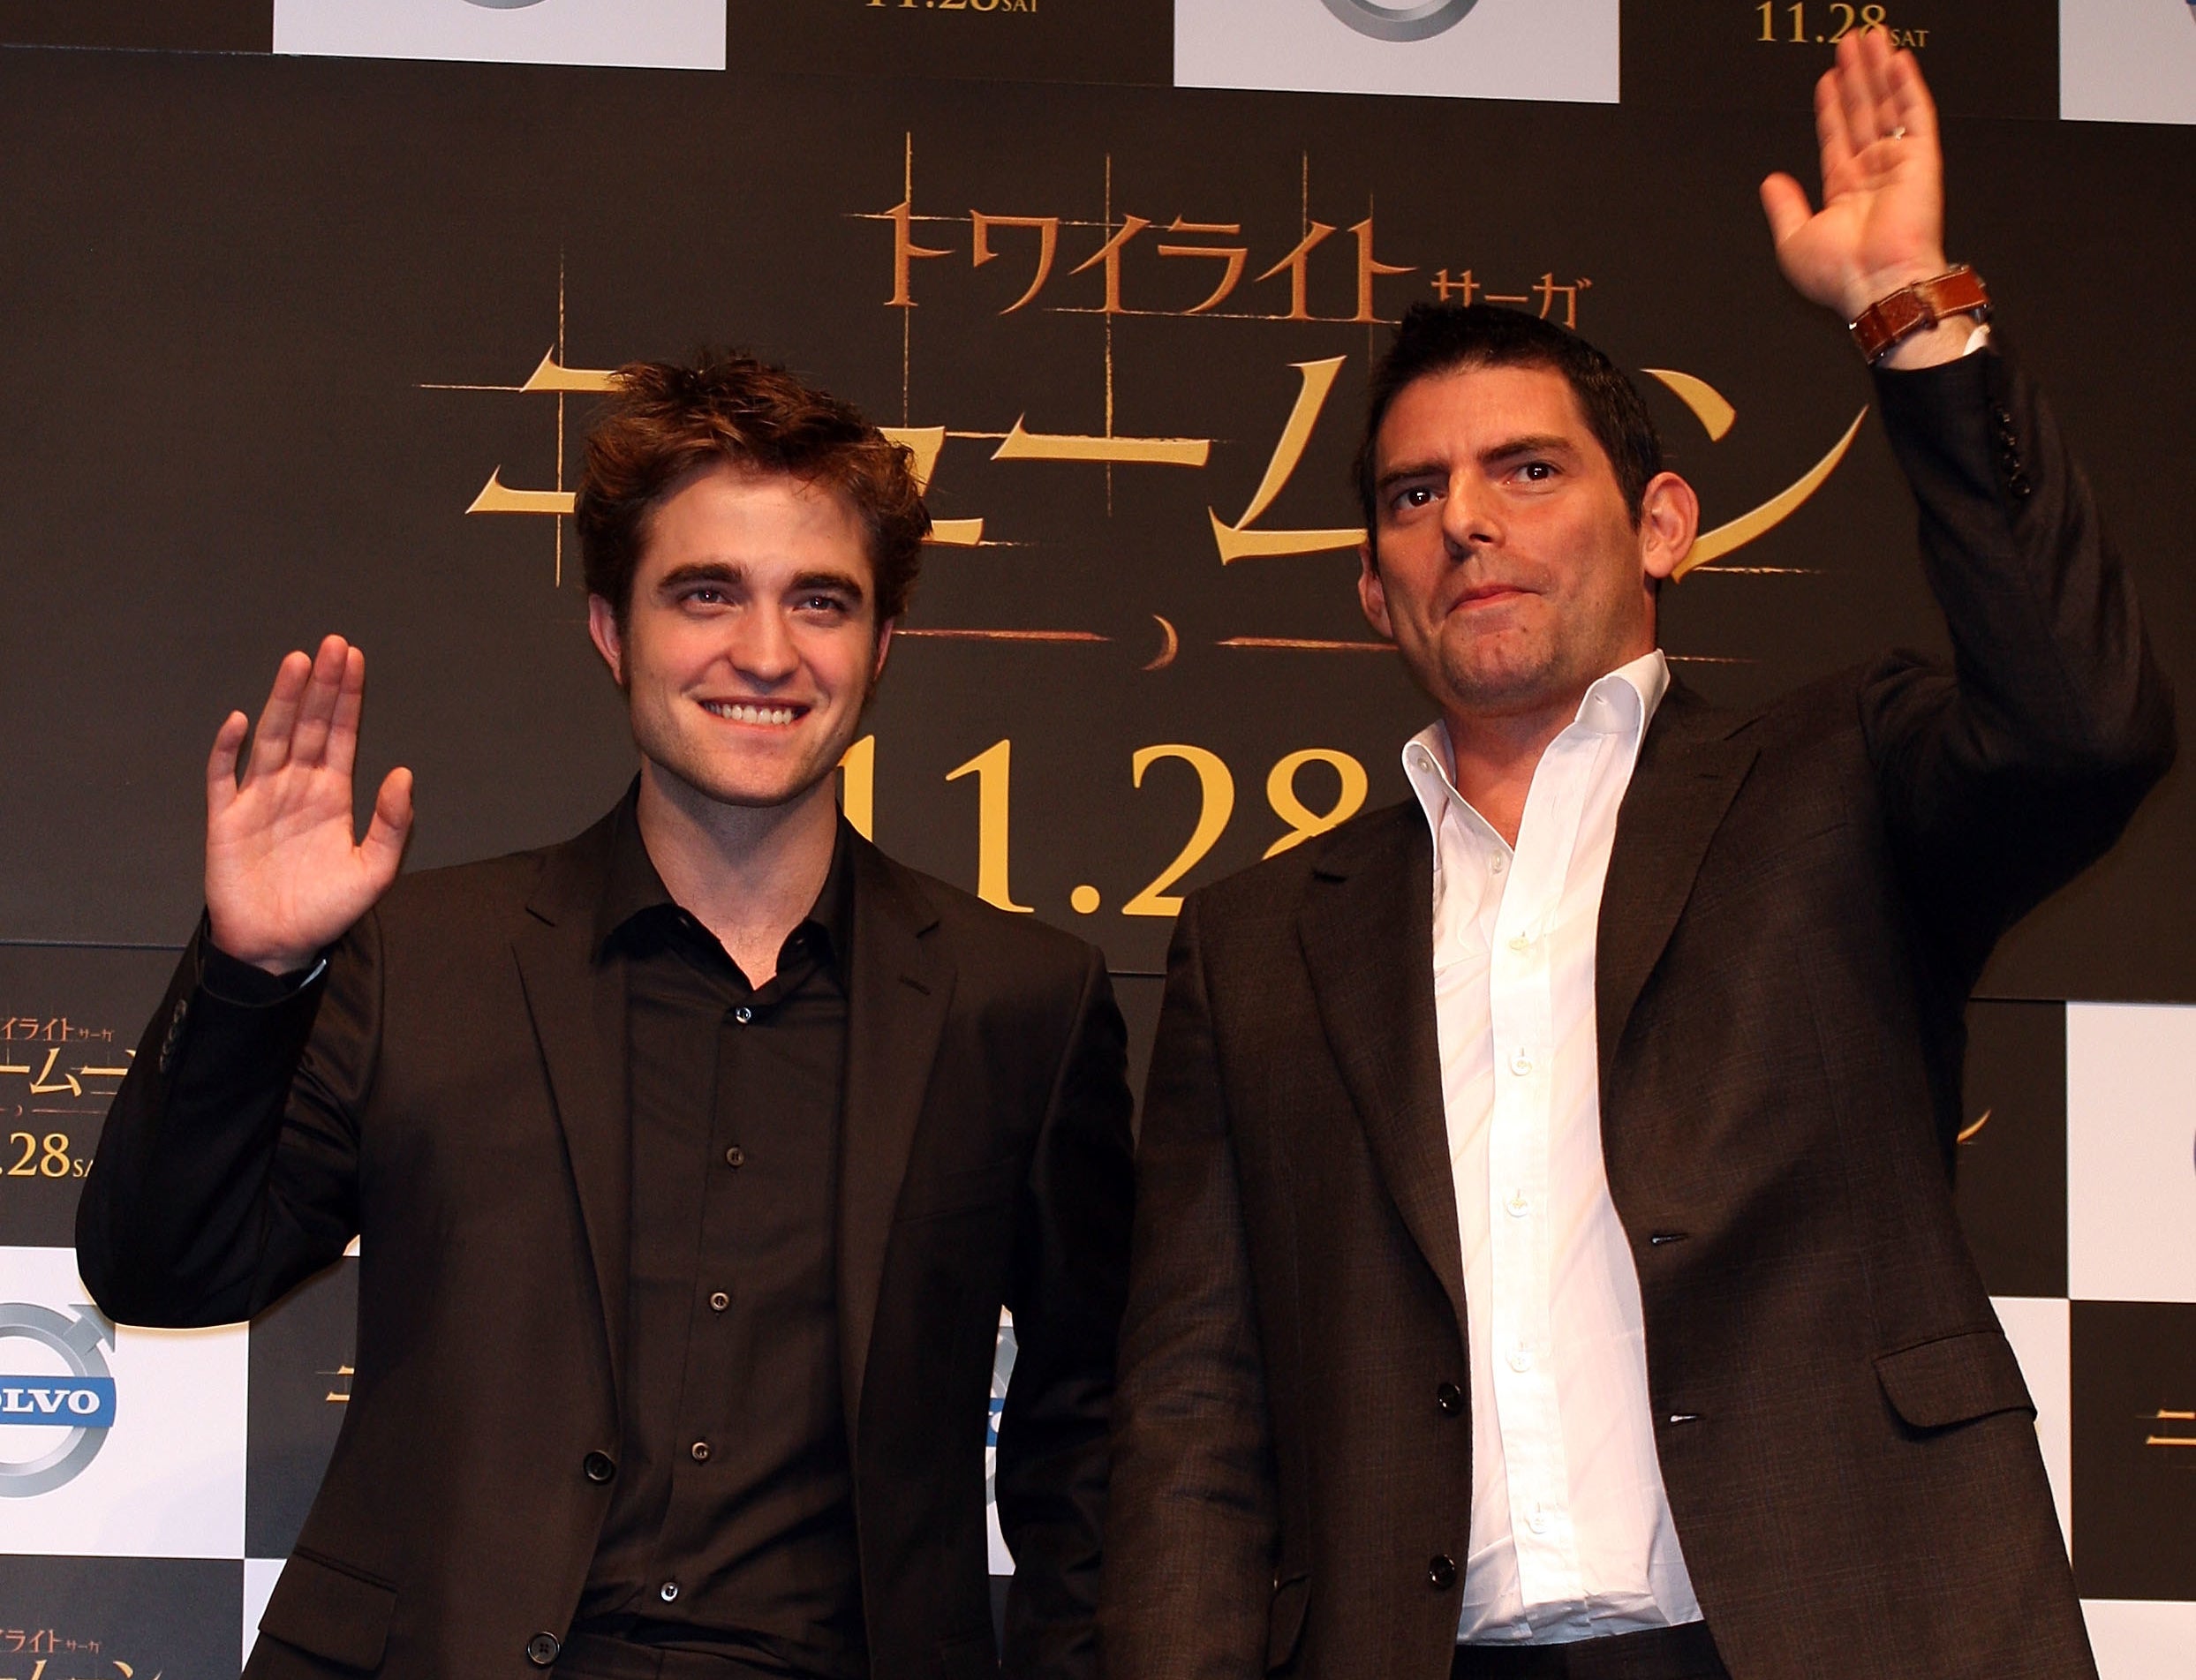 Chris poses with Robert Pattinson